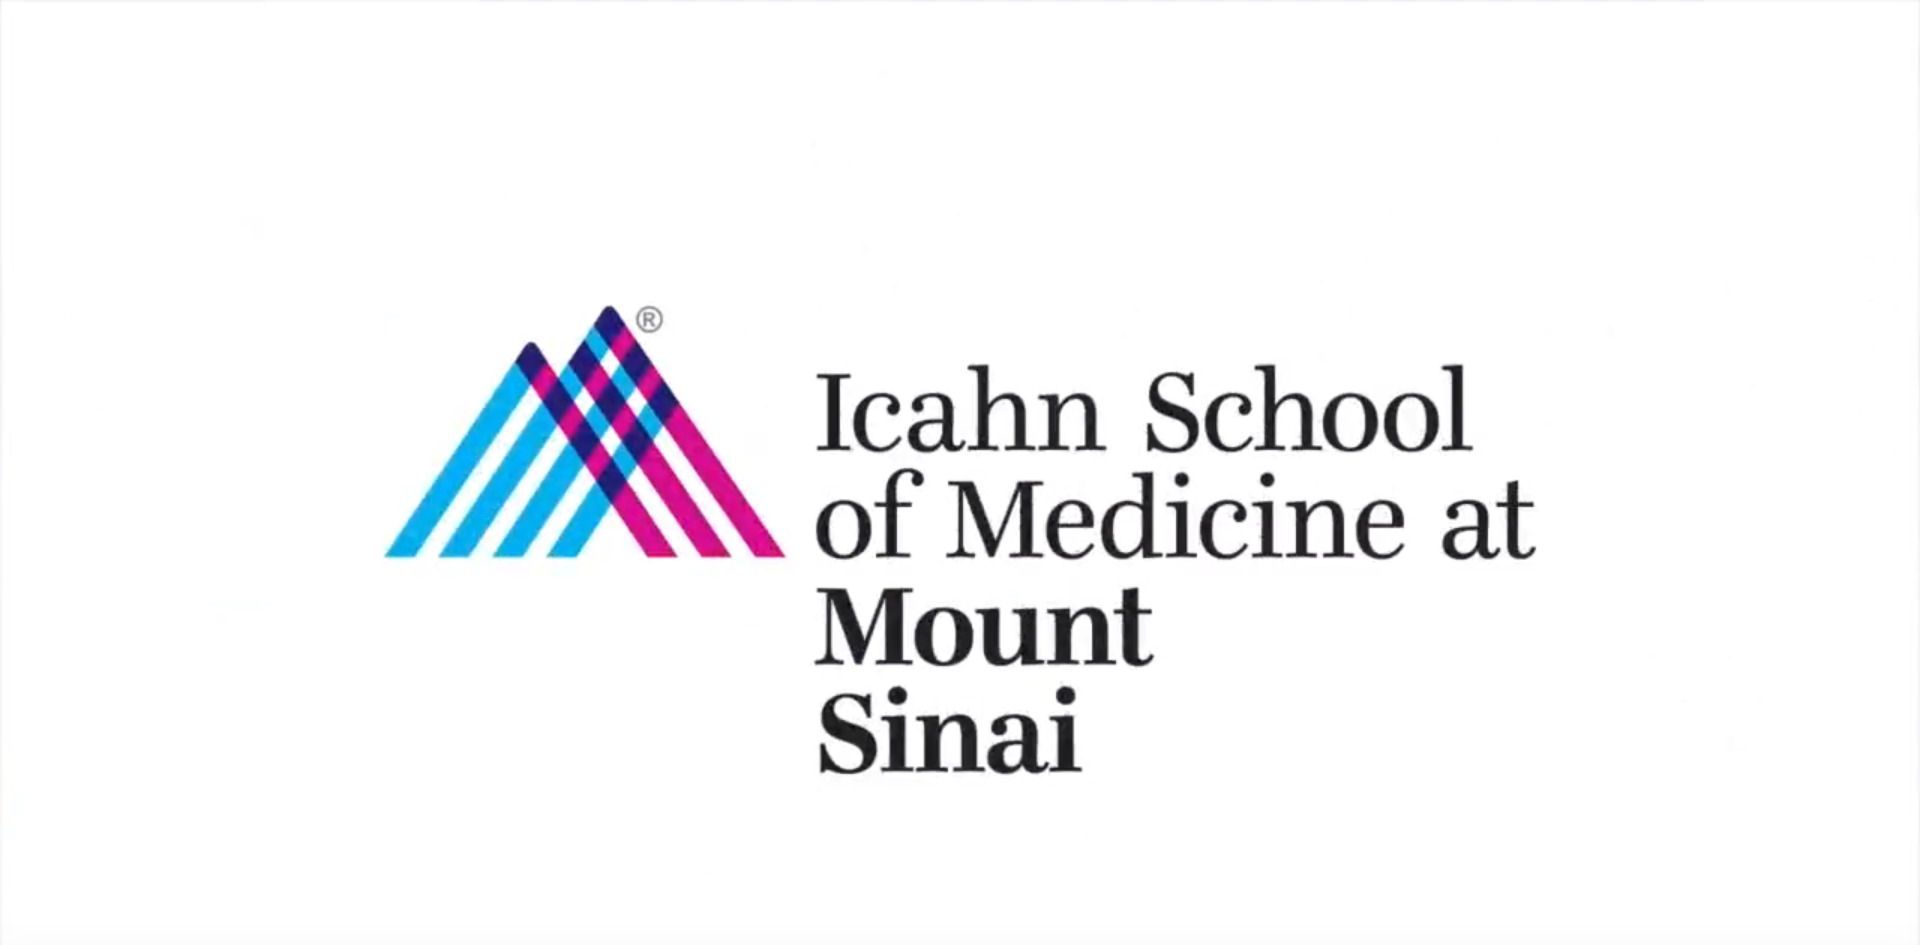 Icahn School of Medicine at Mount Sinai logo.